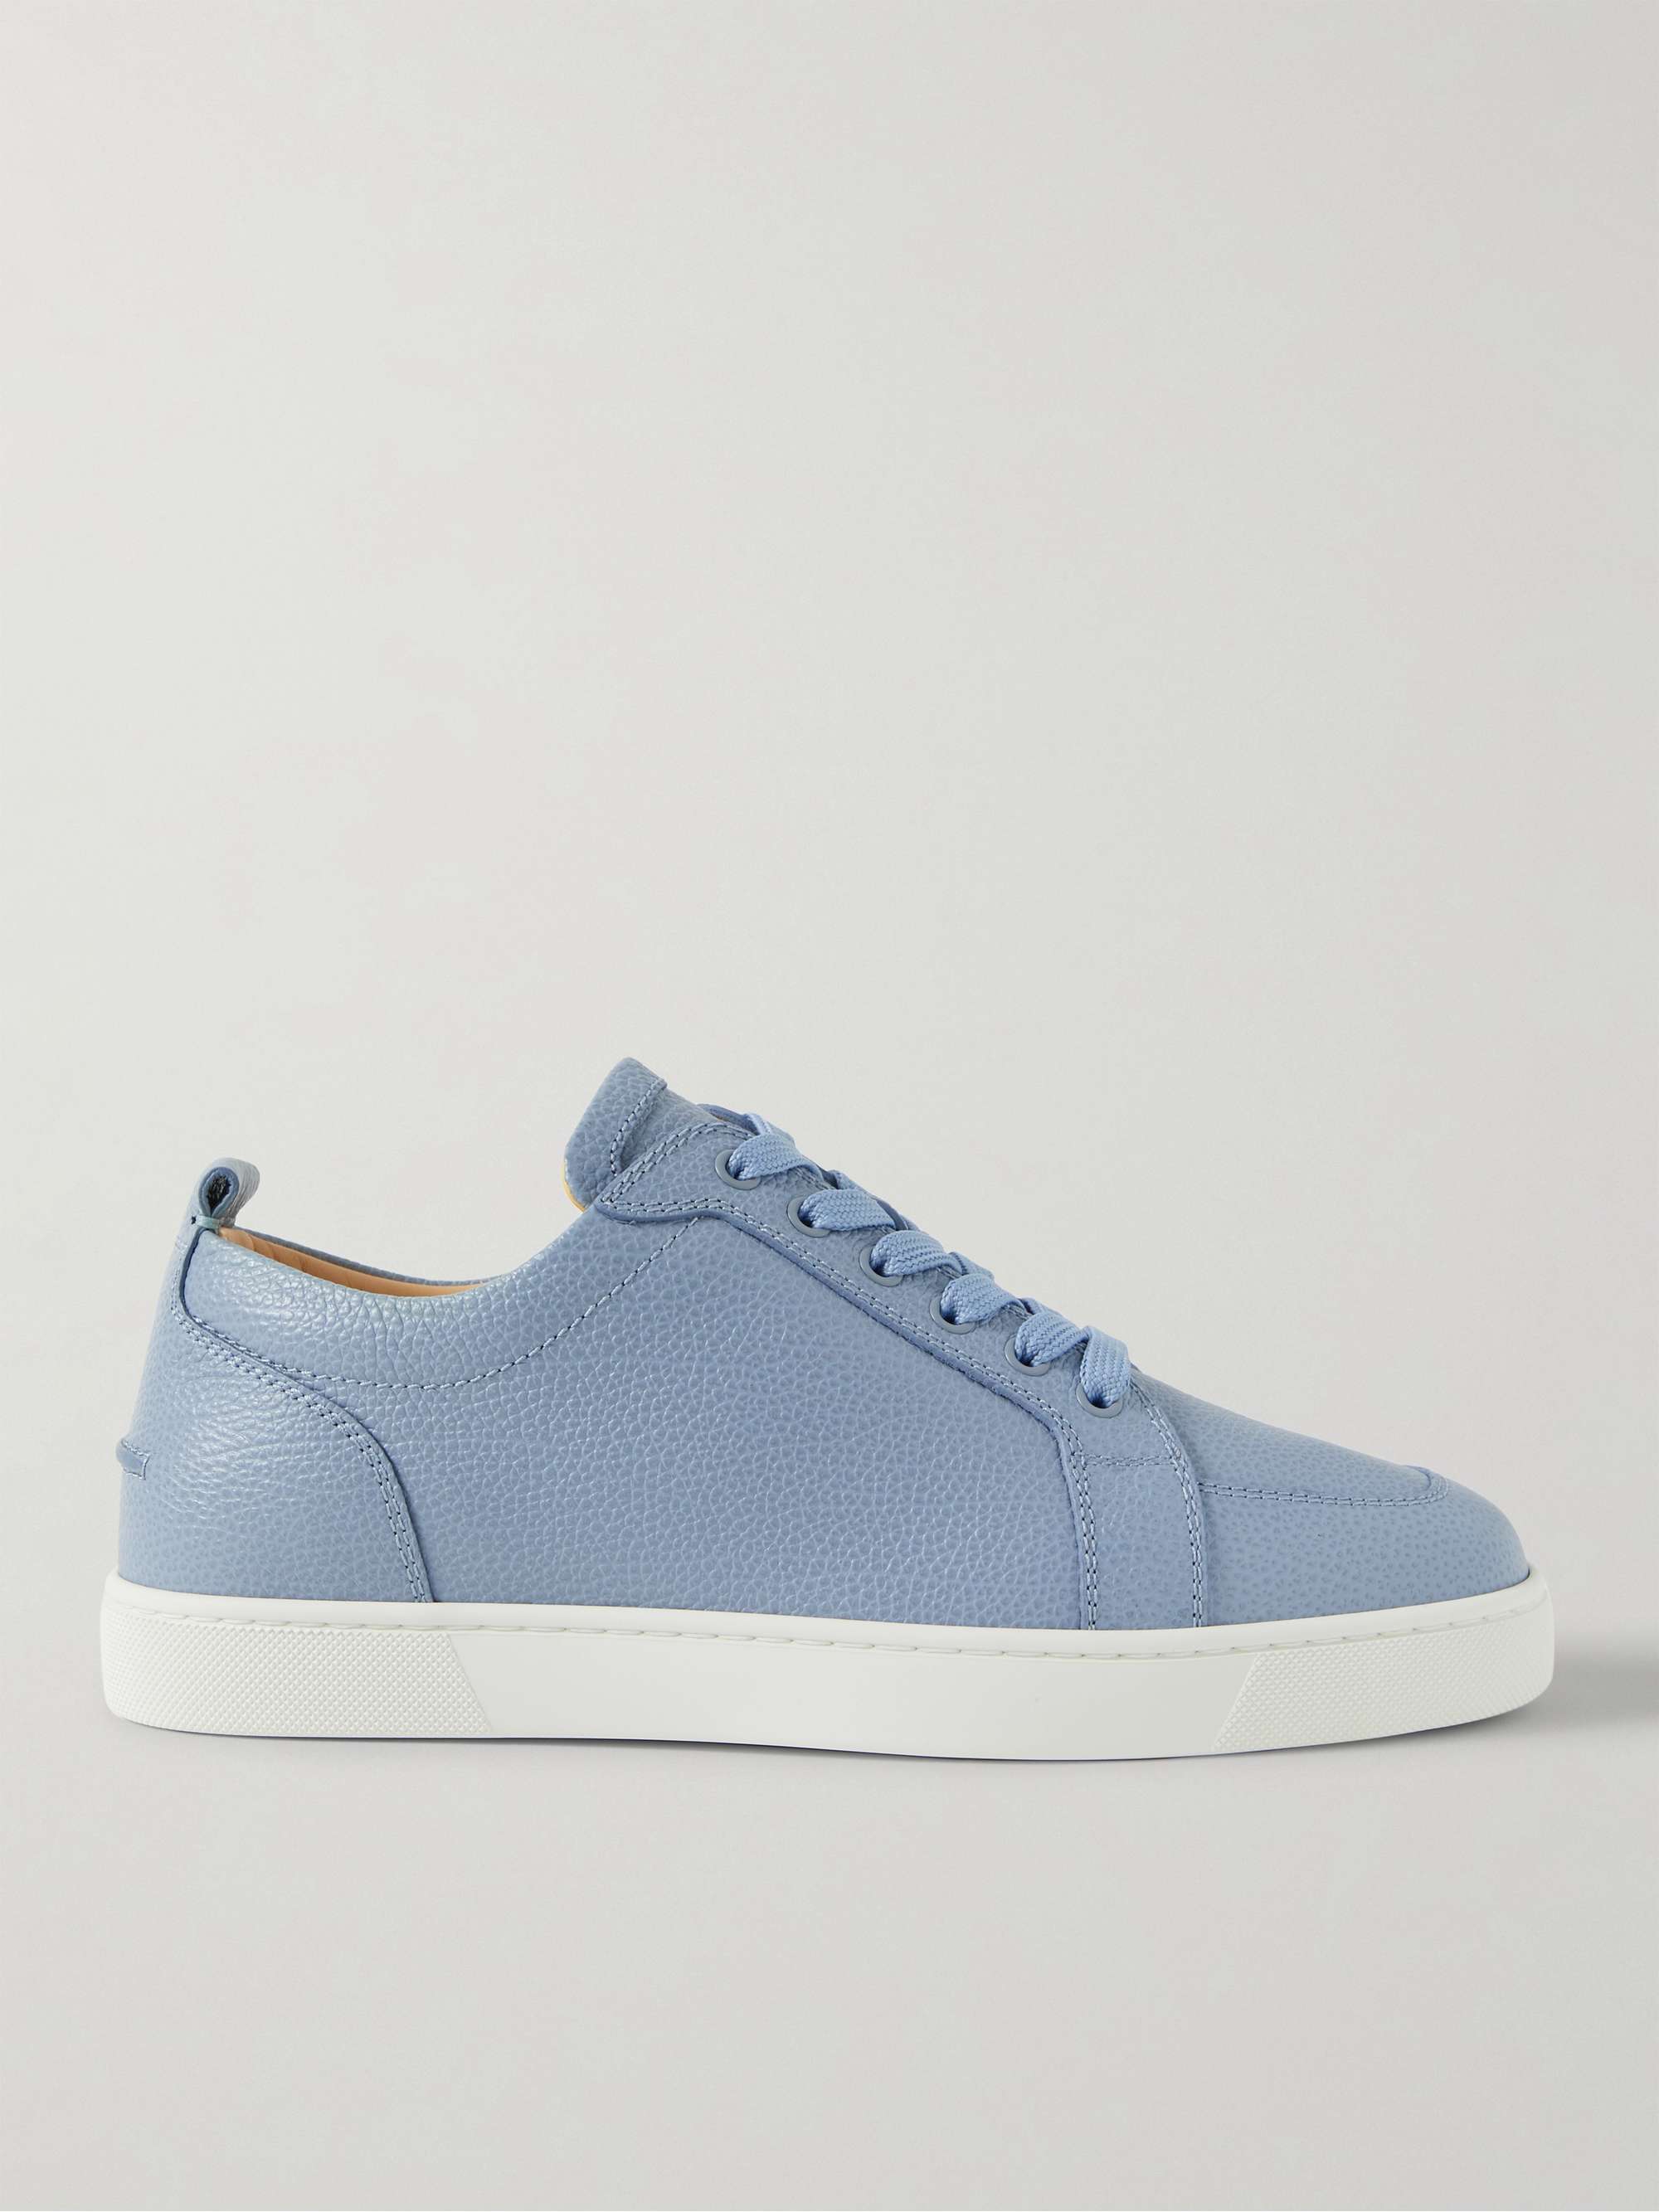 louboutin sneakers blue